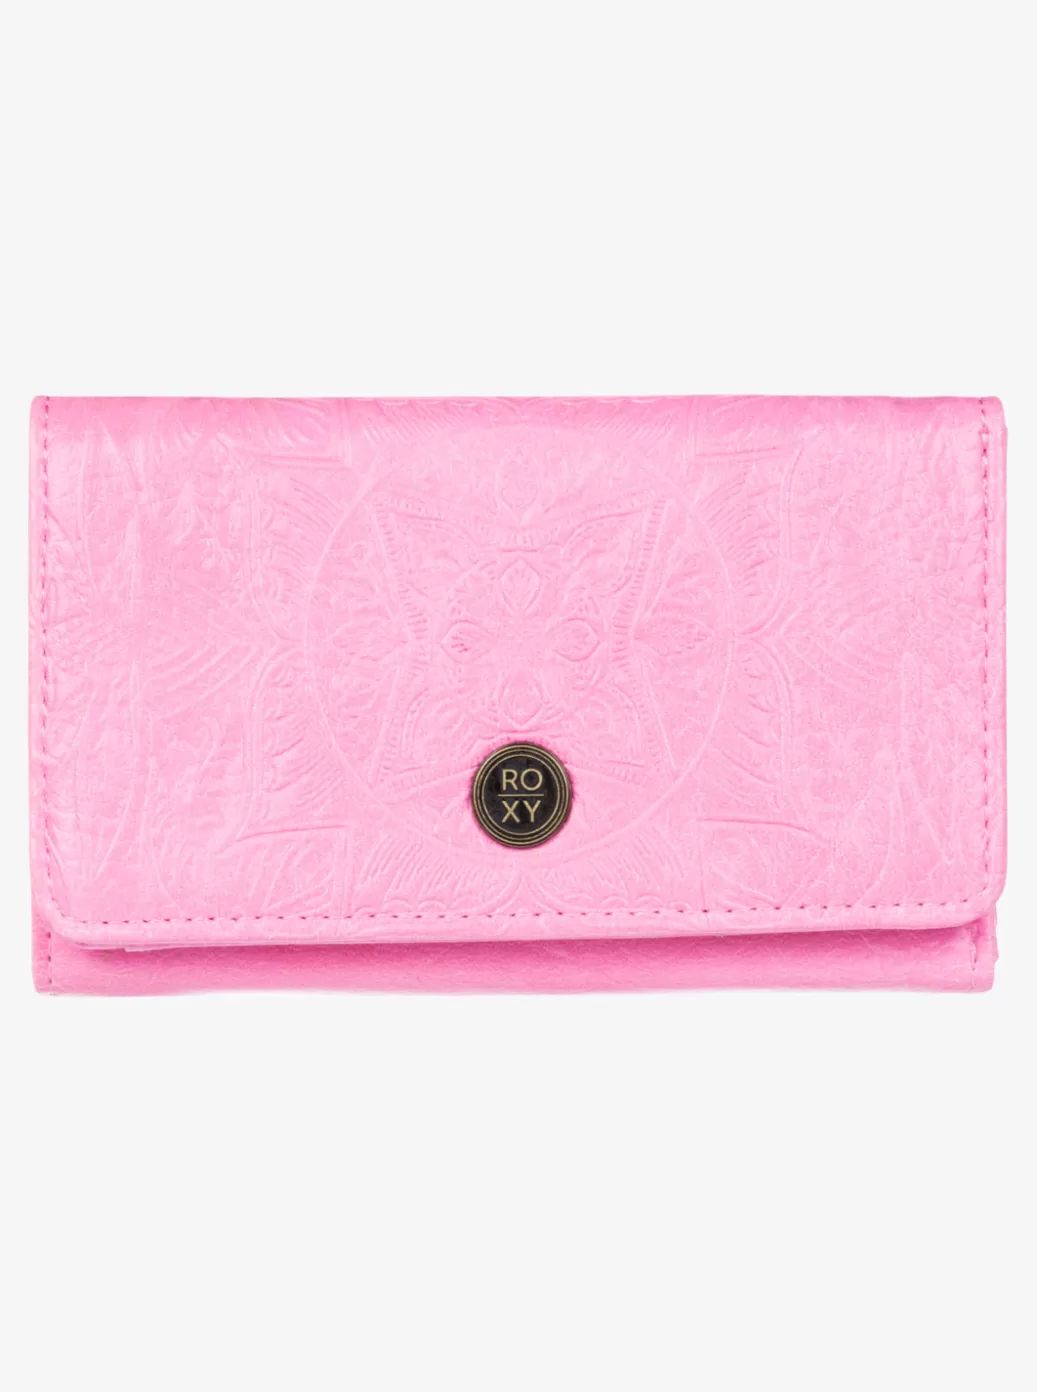 Other Accessories | WOMEN ROXY Crazy Diamond Tri-Fold Wallet Sachet Pink